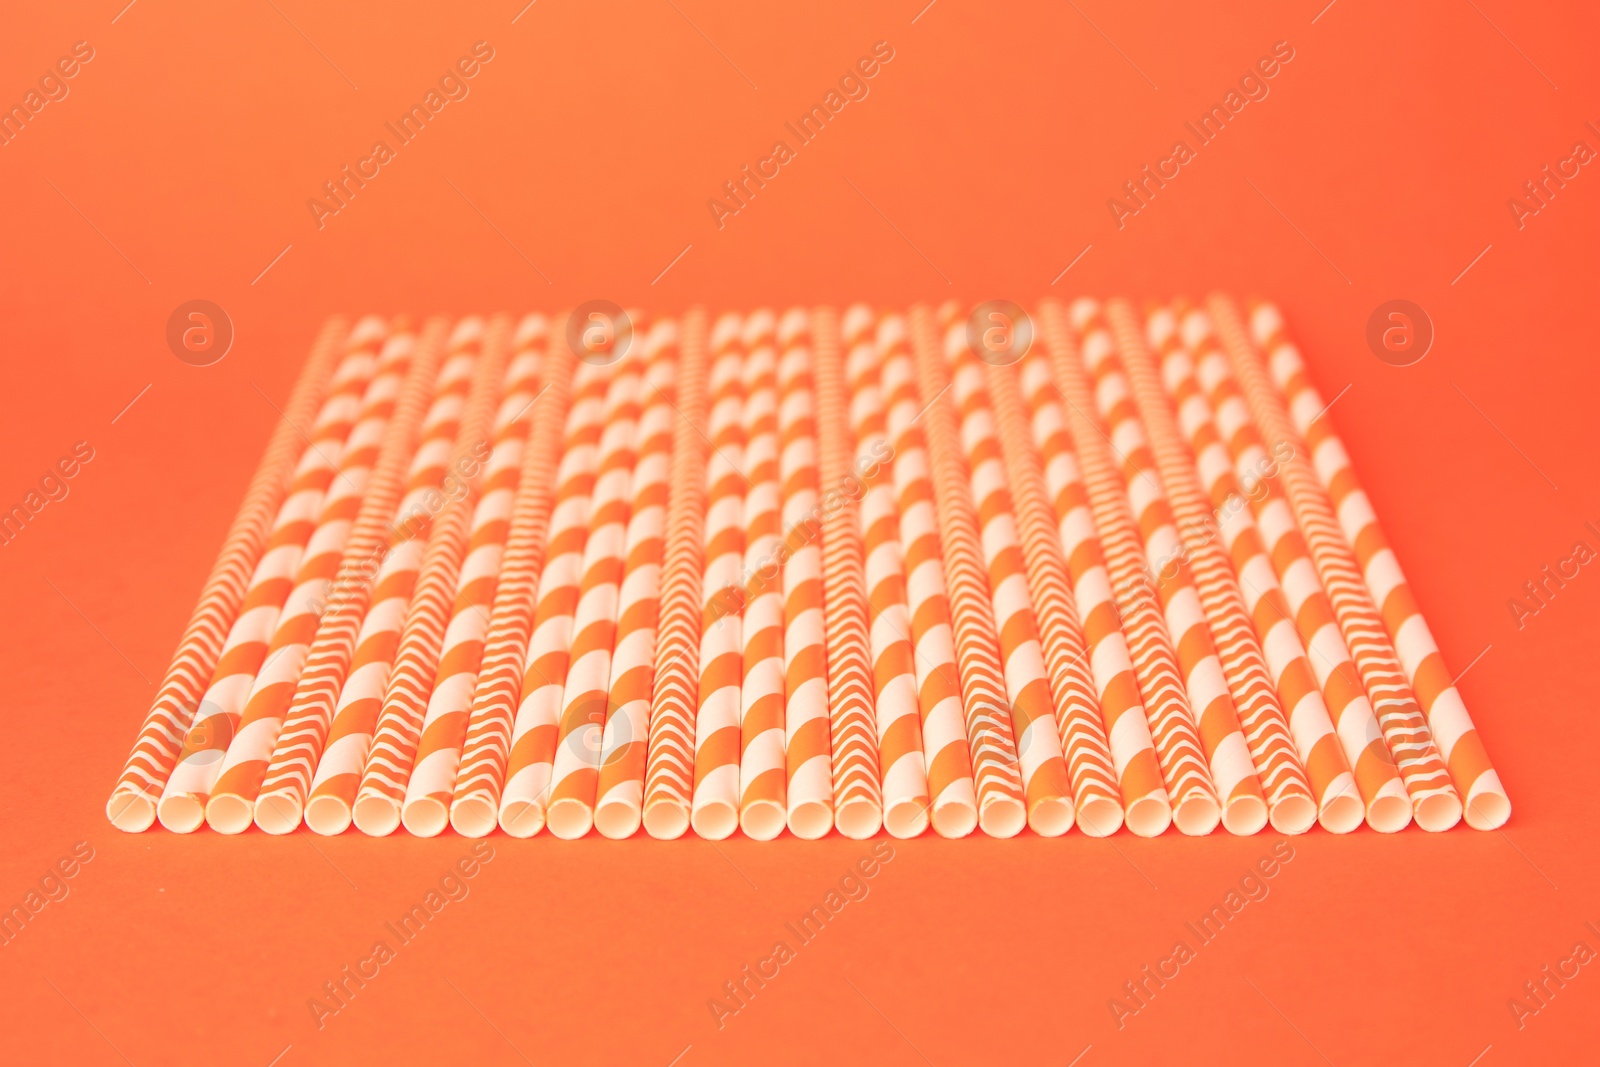 Photo of Many striped paper drinking straws on orange background